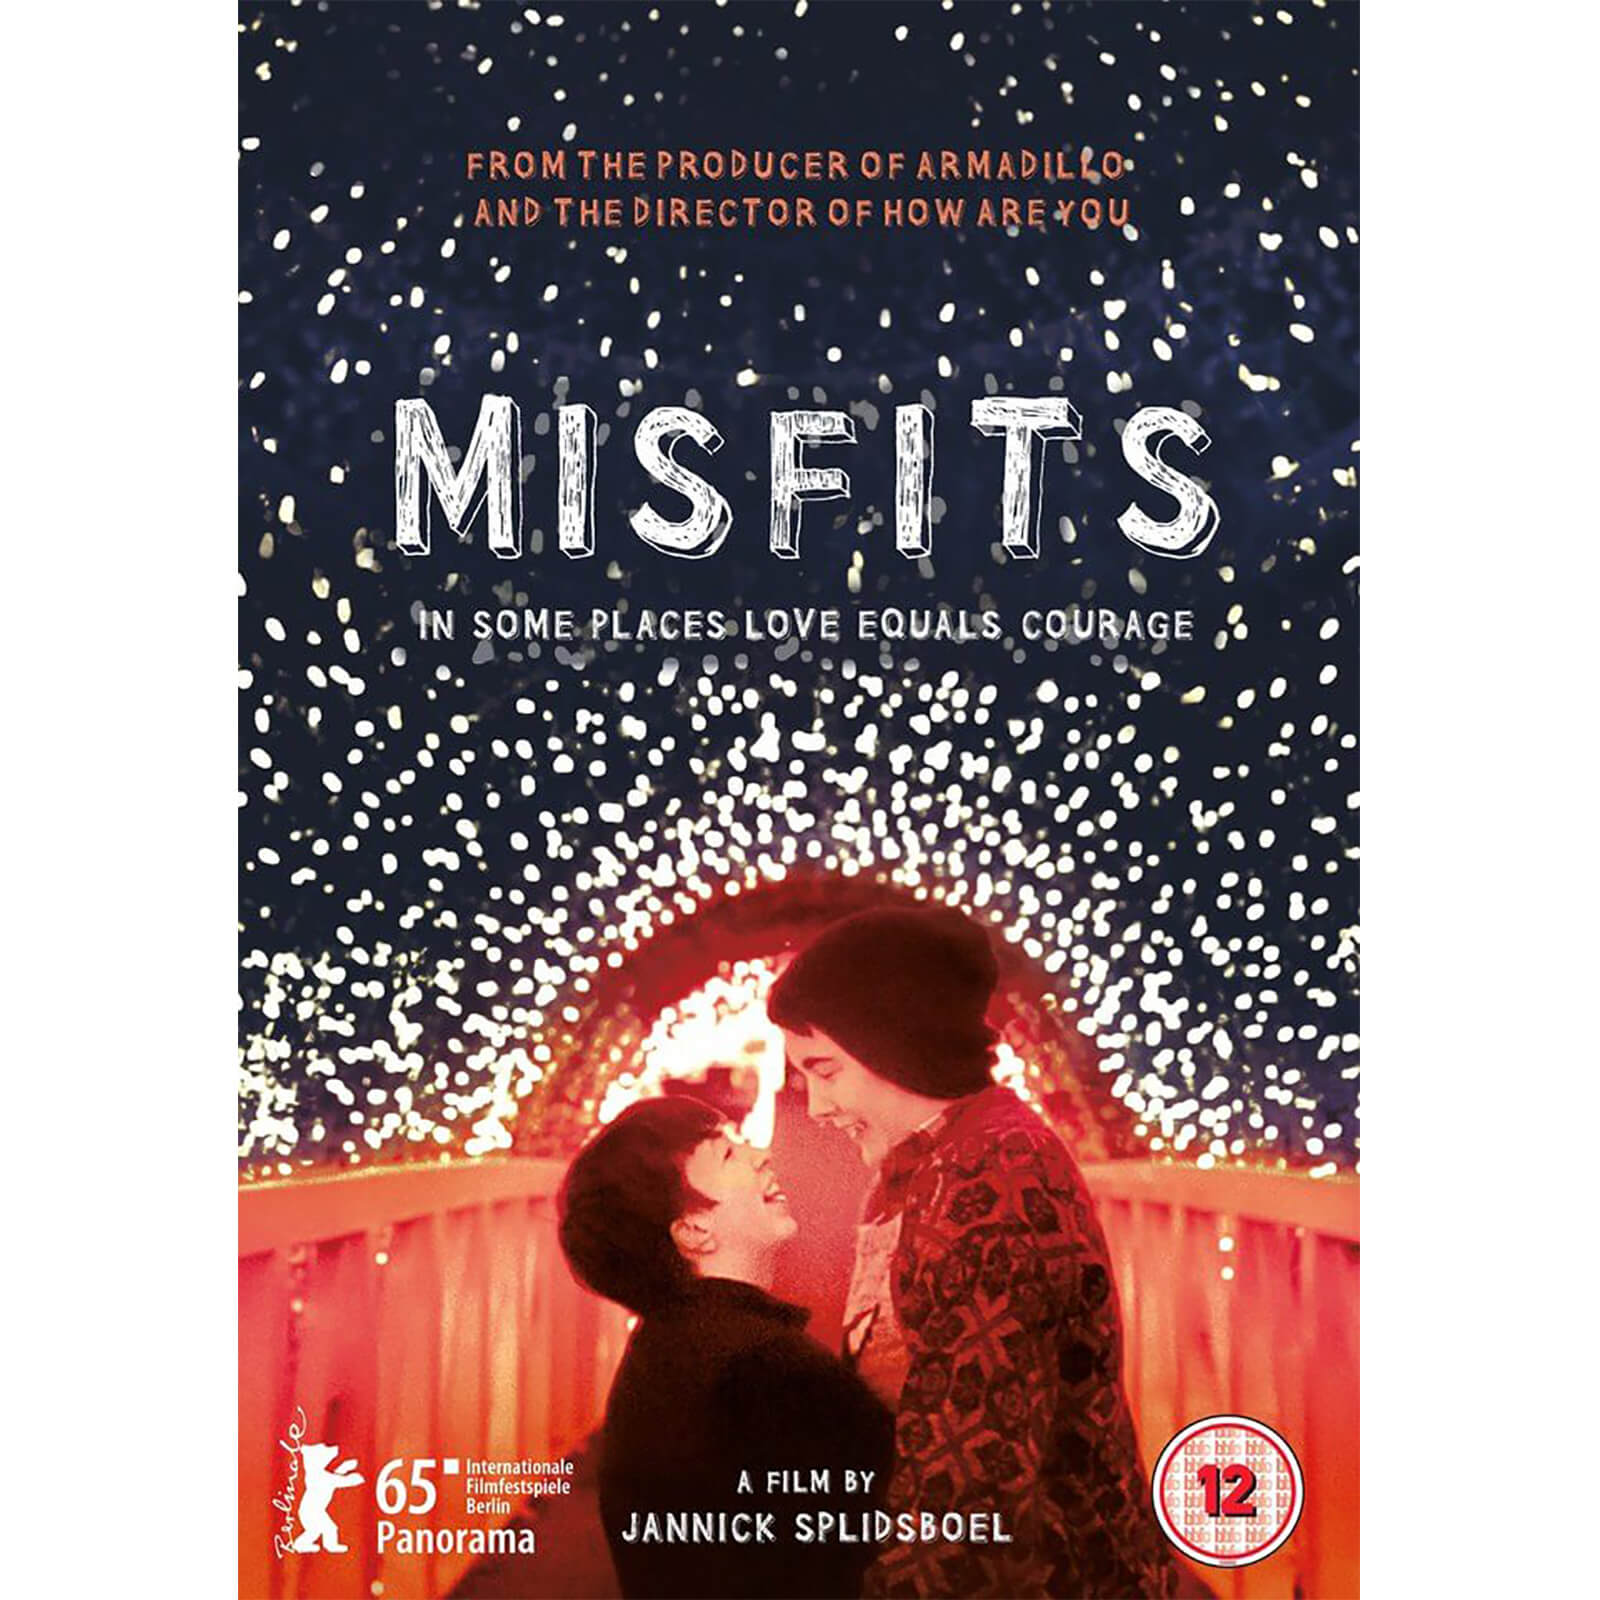 The Misfits von Matchbox Films